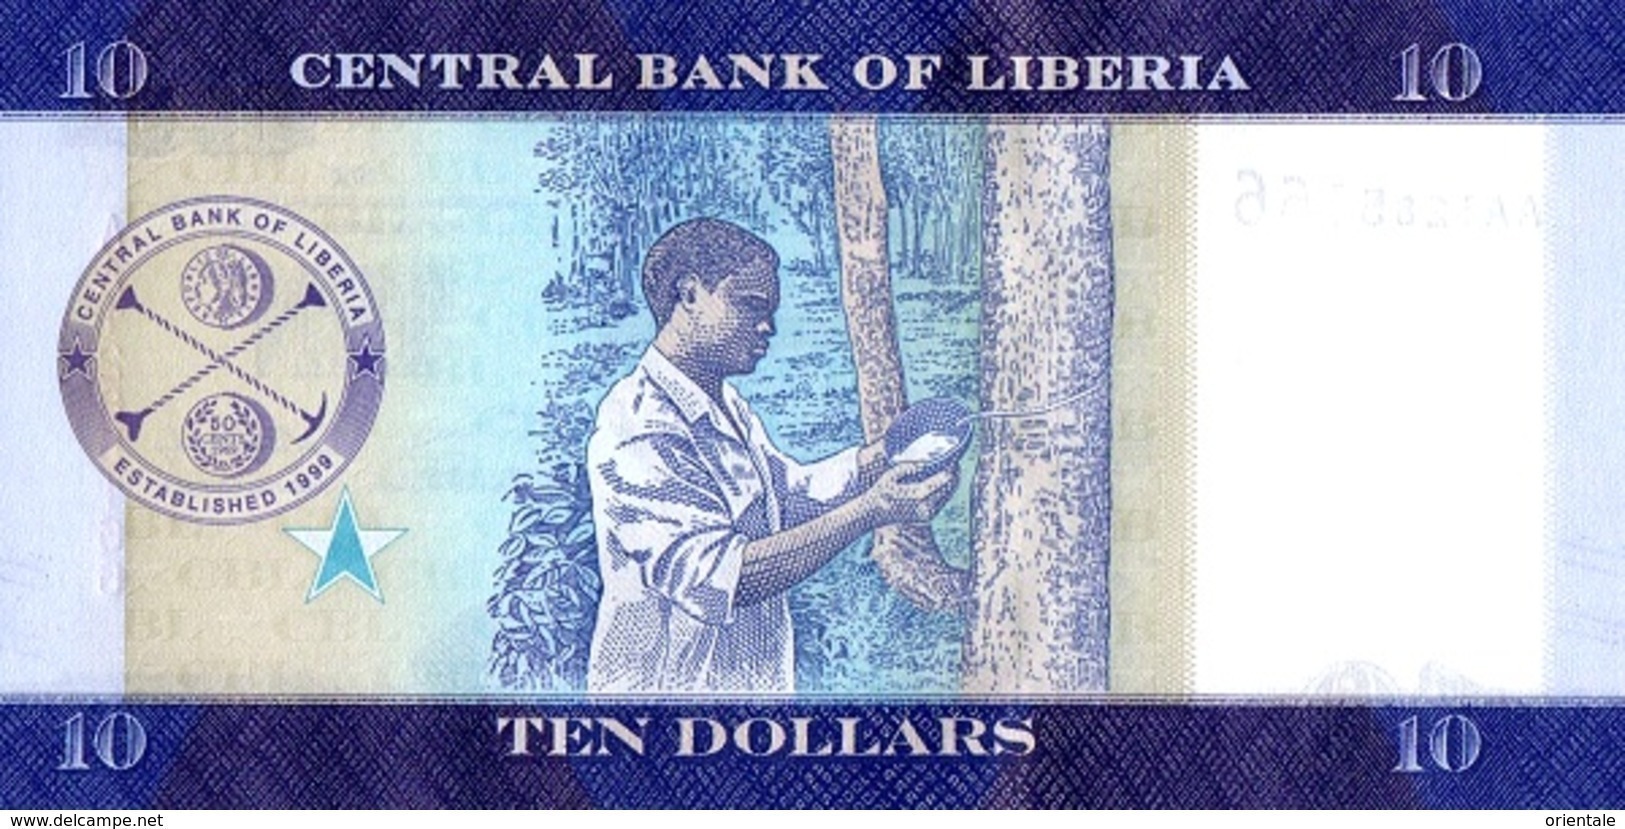 LIBERIA P. 32 10 D 2016 UNC - Liberia